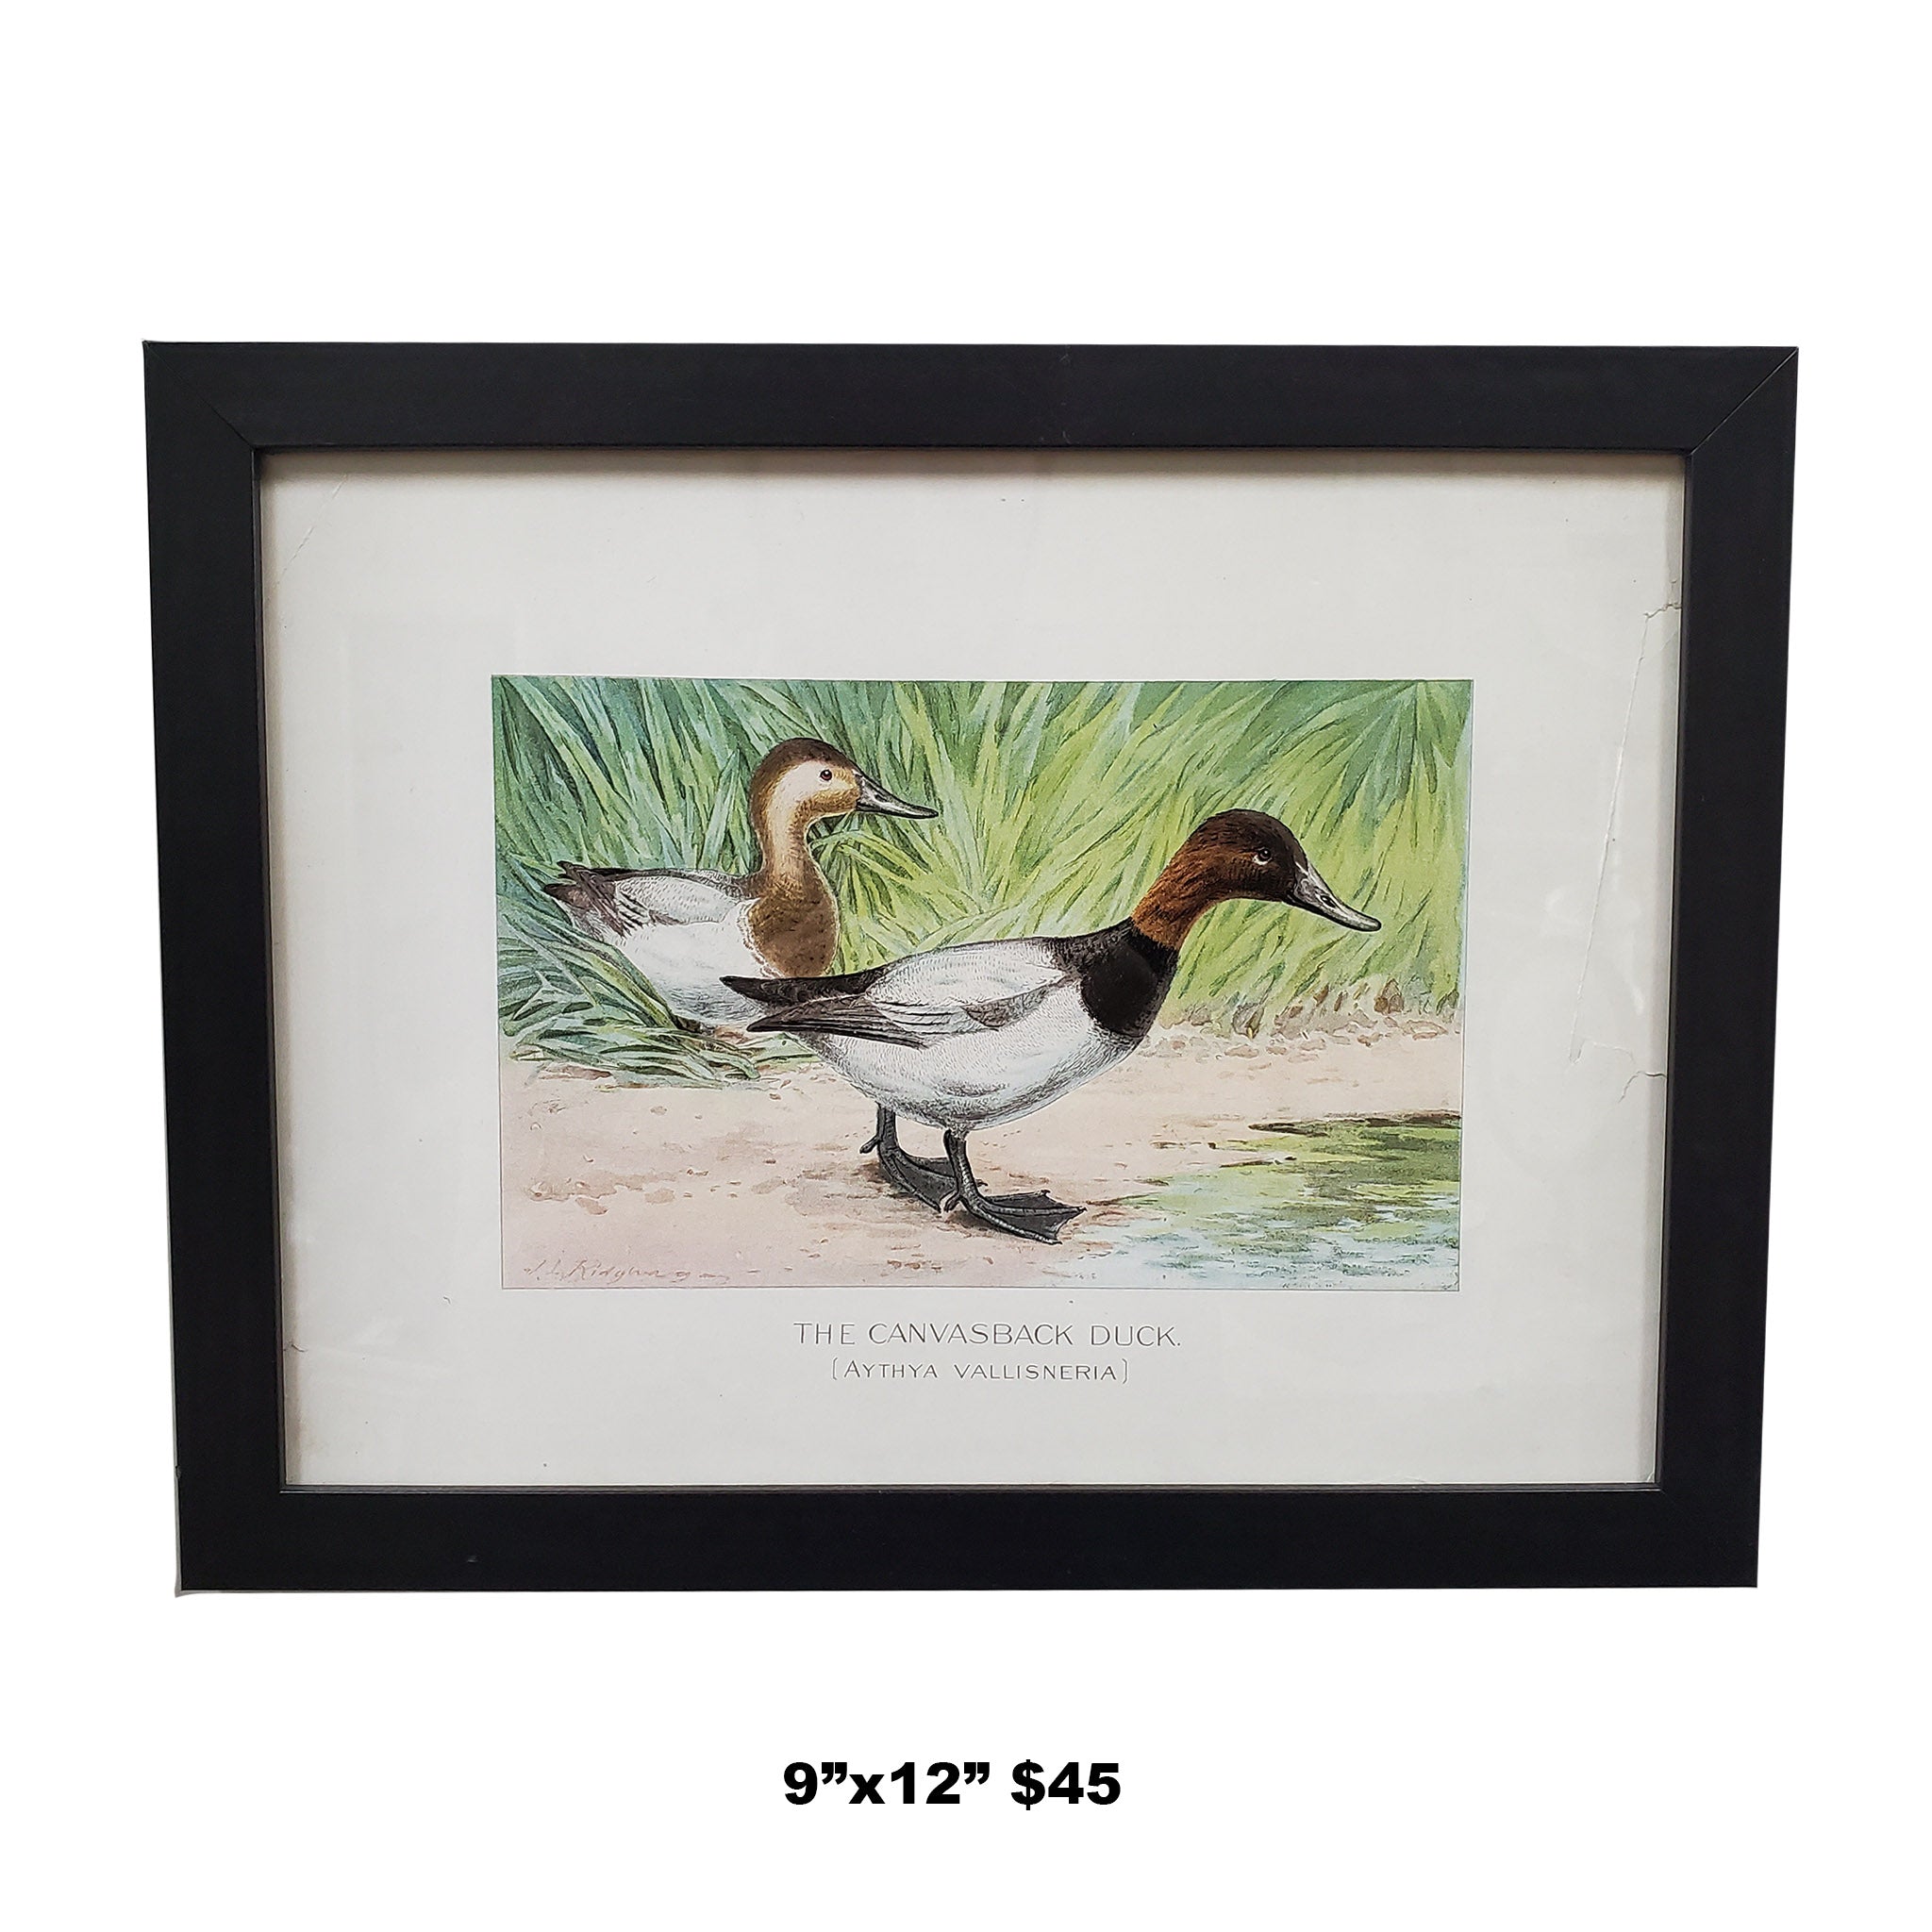 Vintage Print of Two Ducks